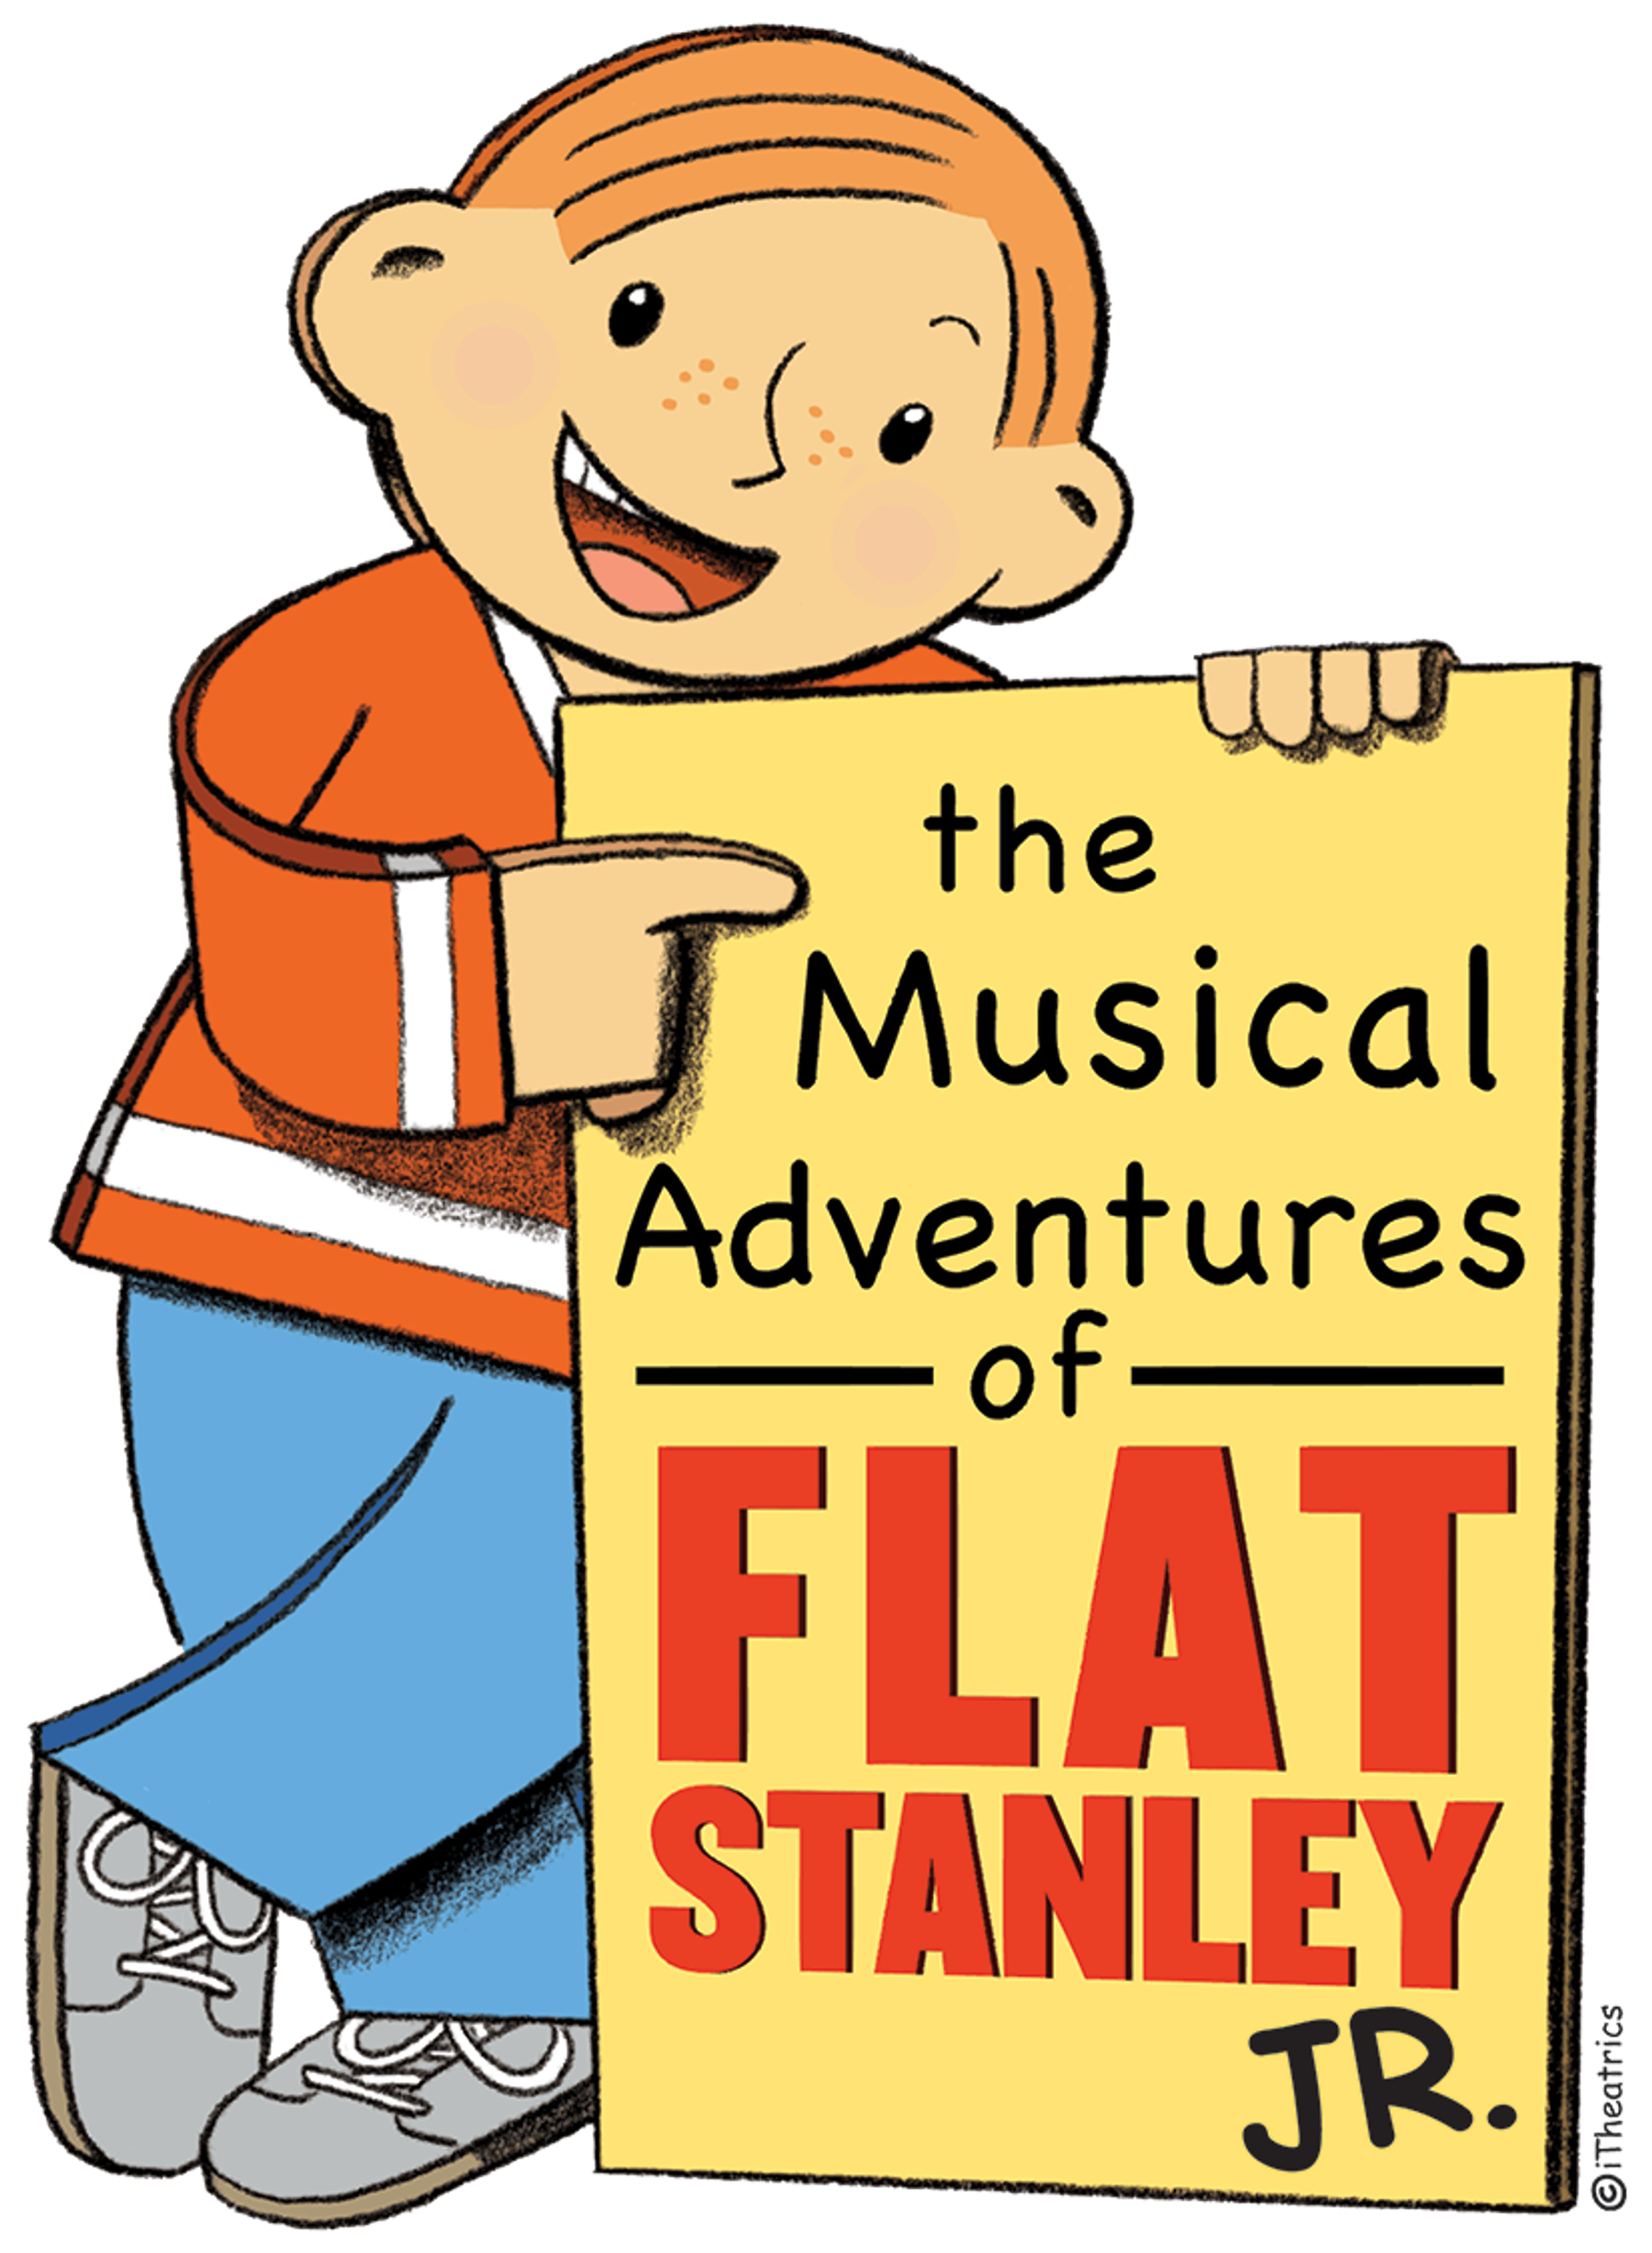 The Musical Adventures of Flat Stanley JR. | Downtown Arlington, TX